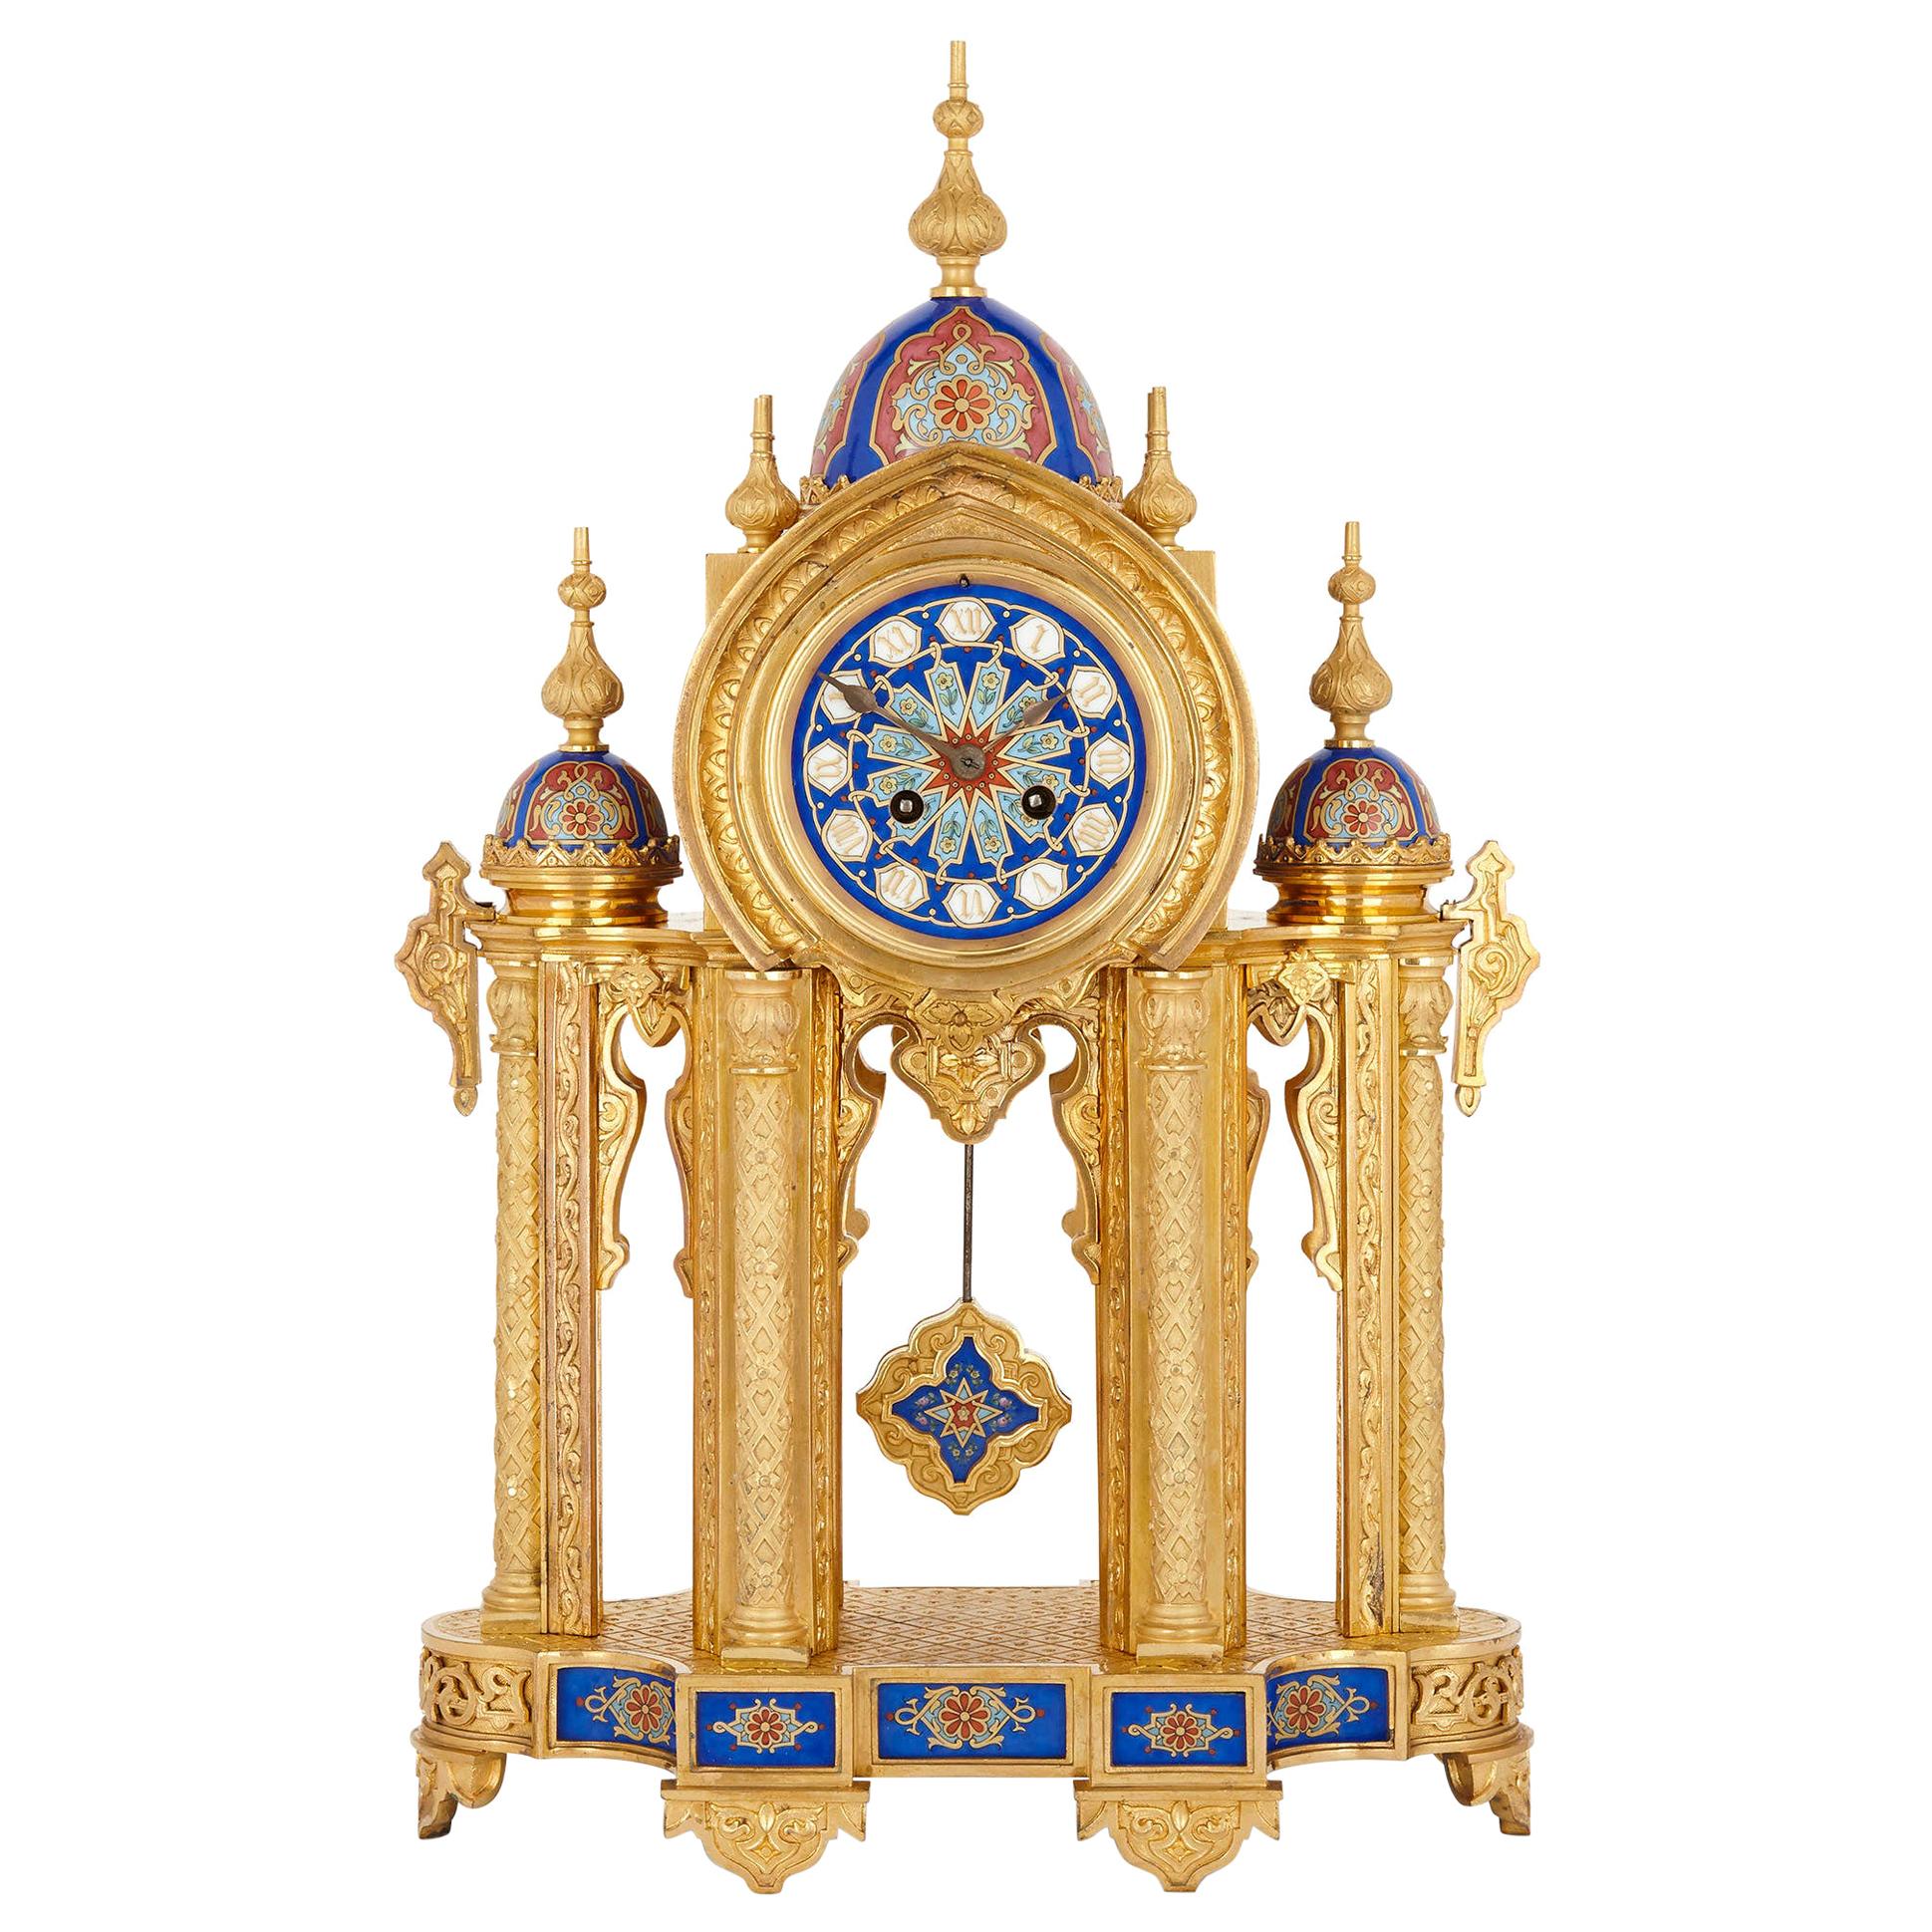 Belle Époque Period Ormolu and Porcelain Mantel Clock in Moorish Style For Sale